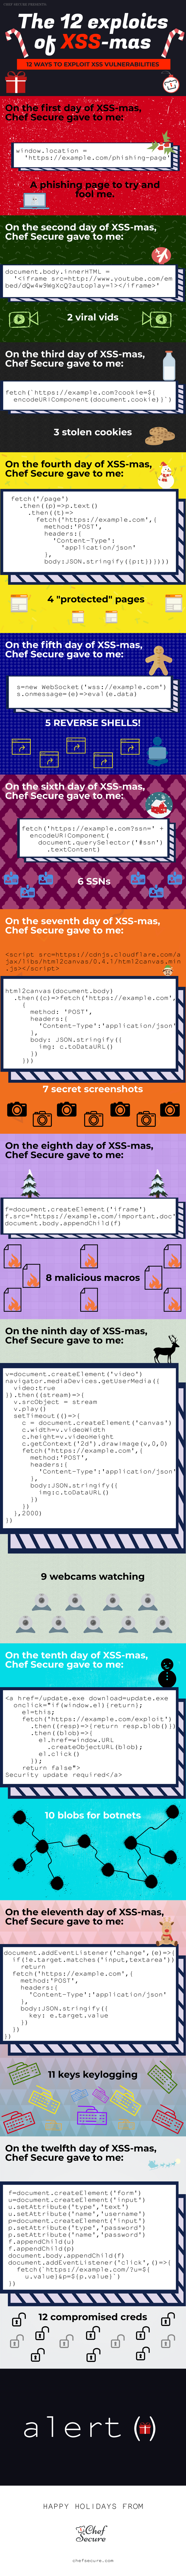 The 12 Exploits of XSS-mas [Infographic]